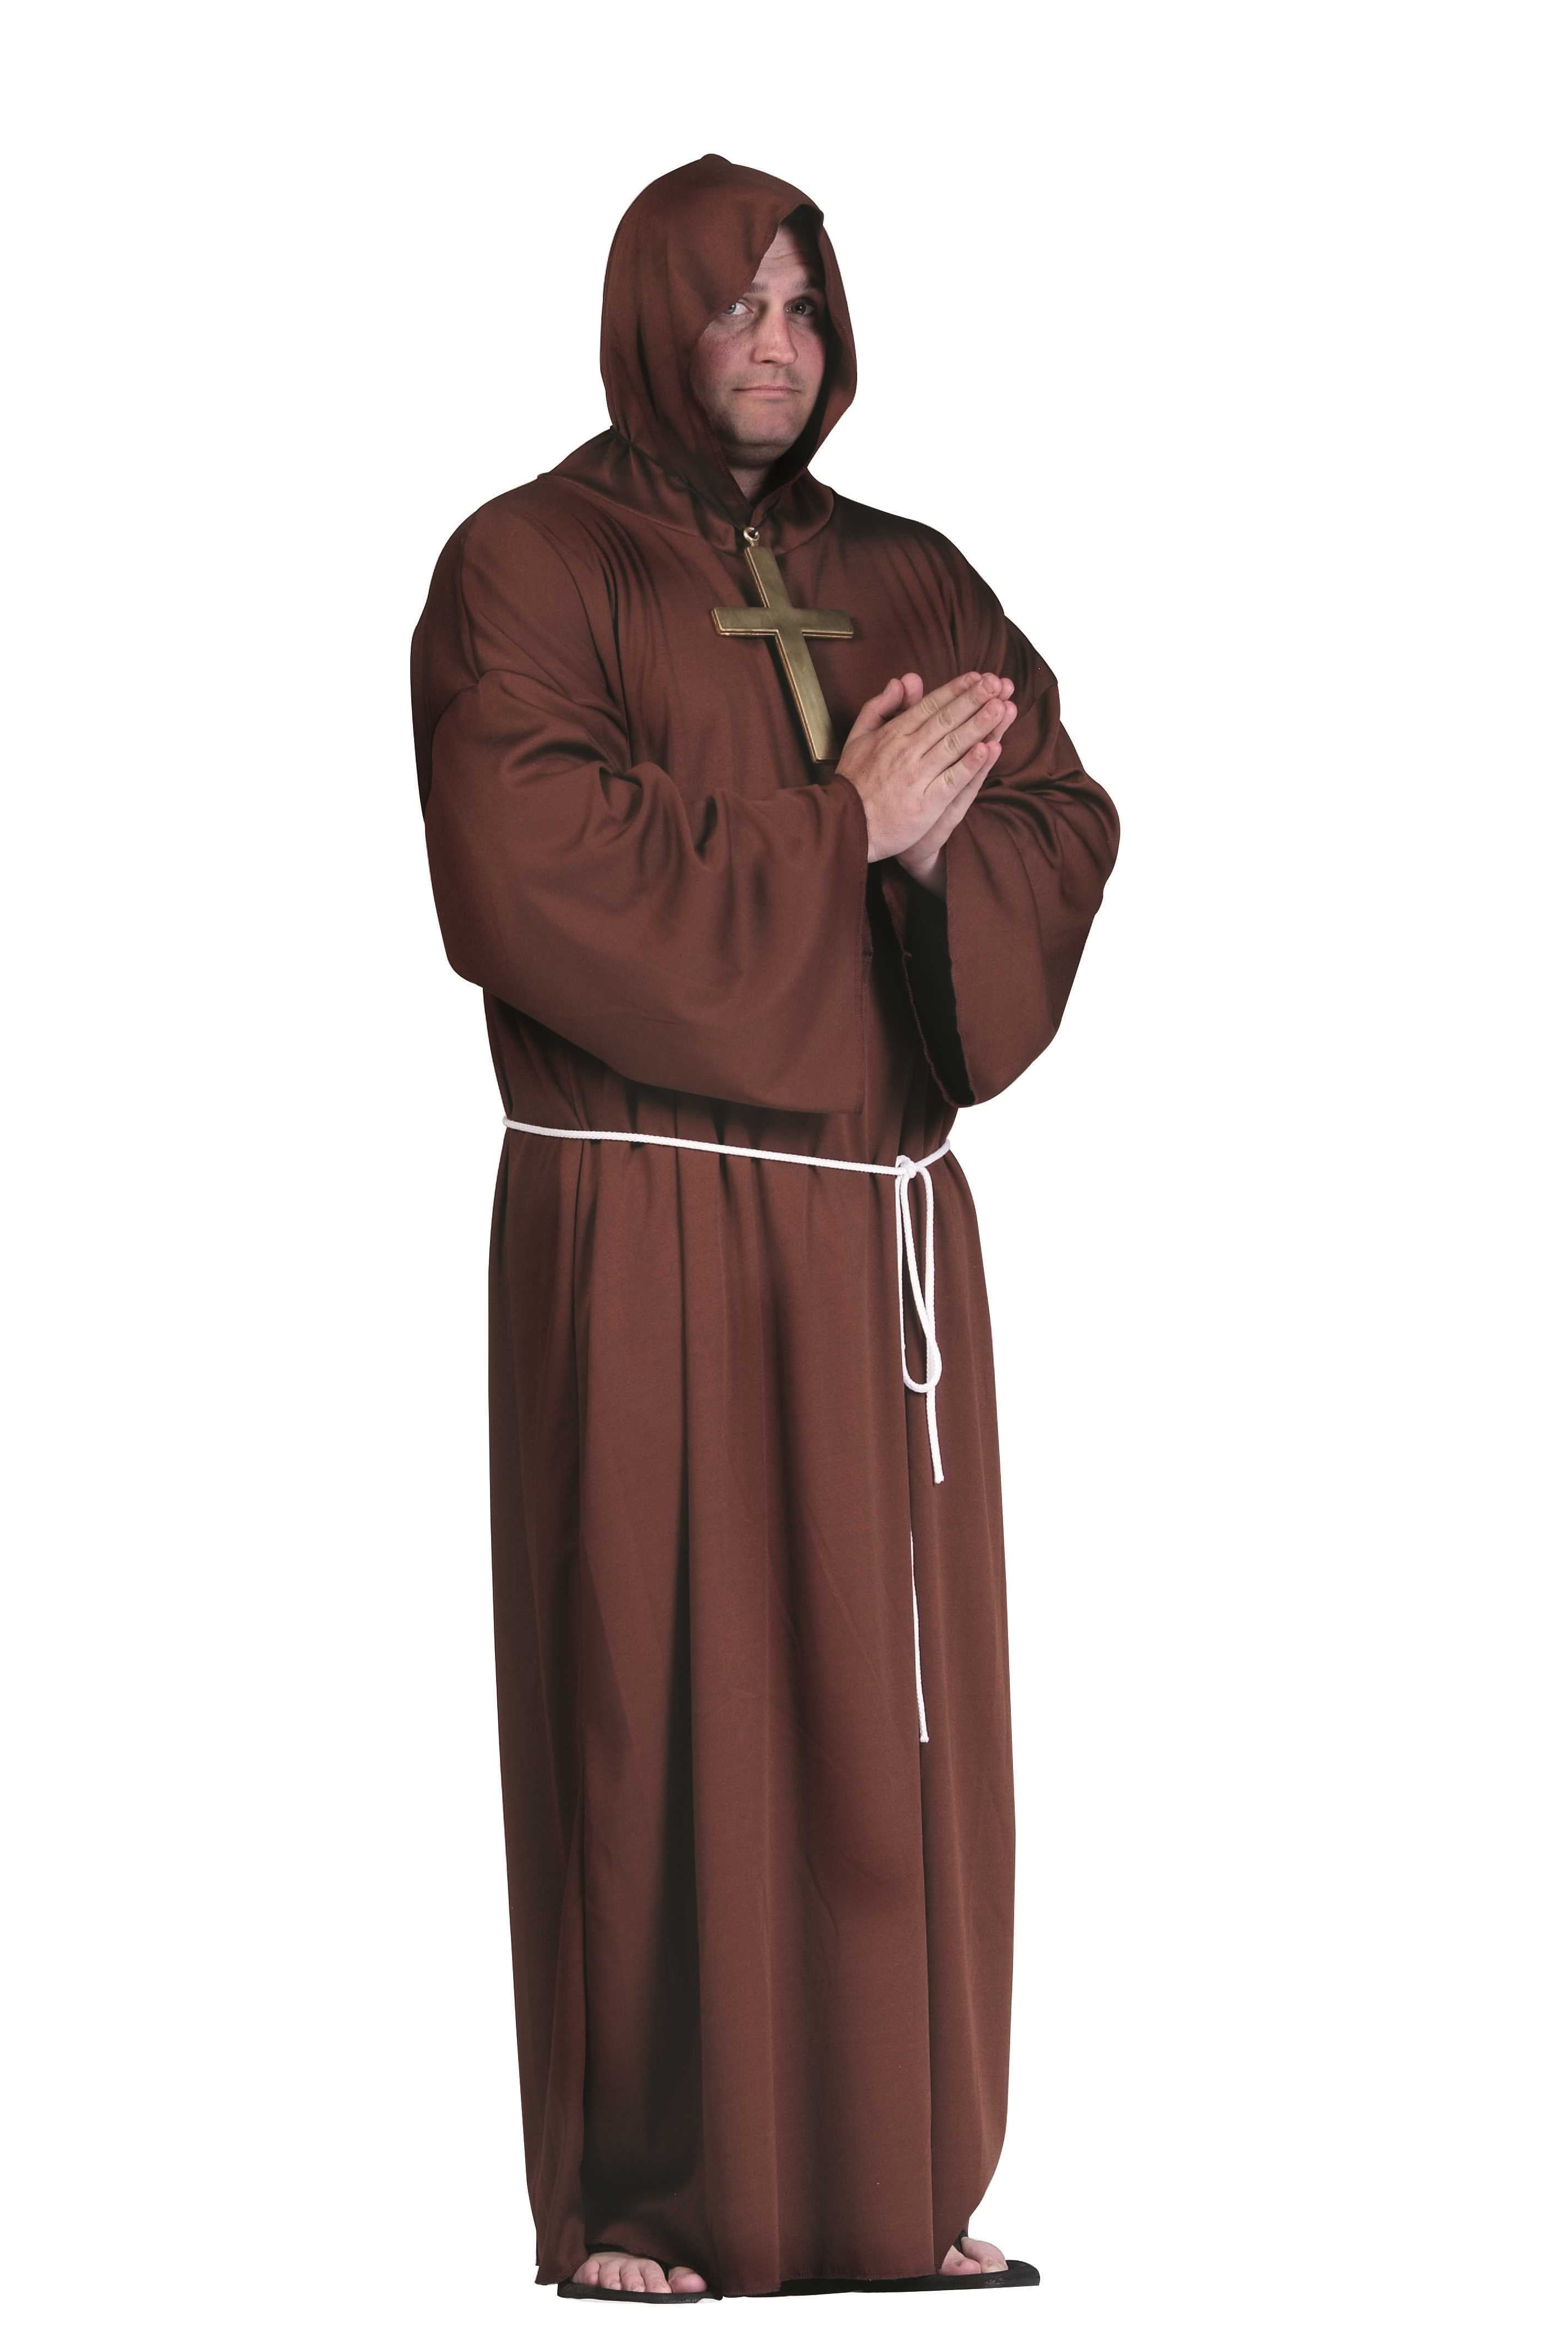 Super Deluxe Monk Costume Plus Size - Walmart.com